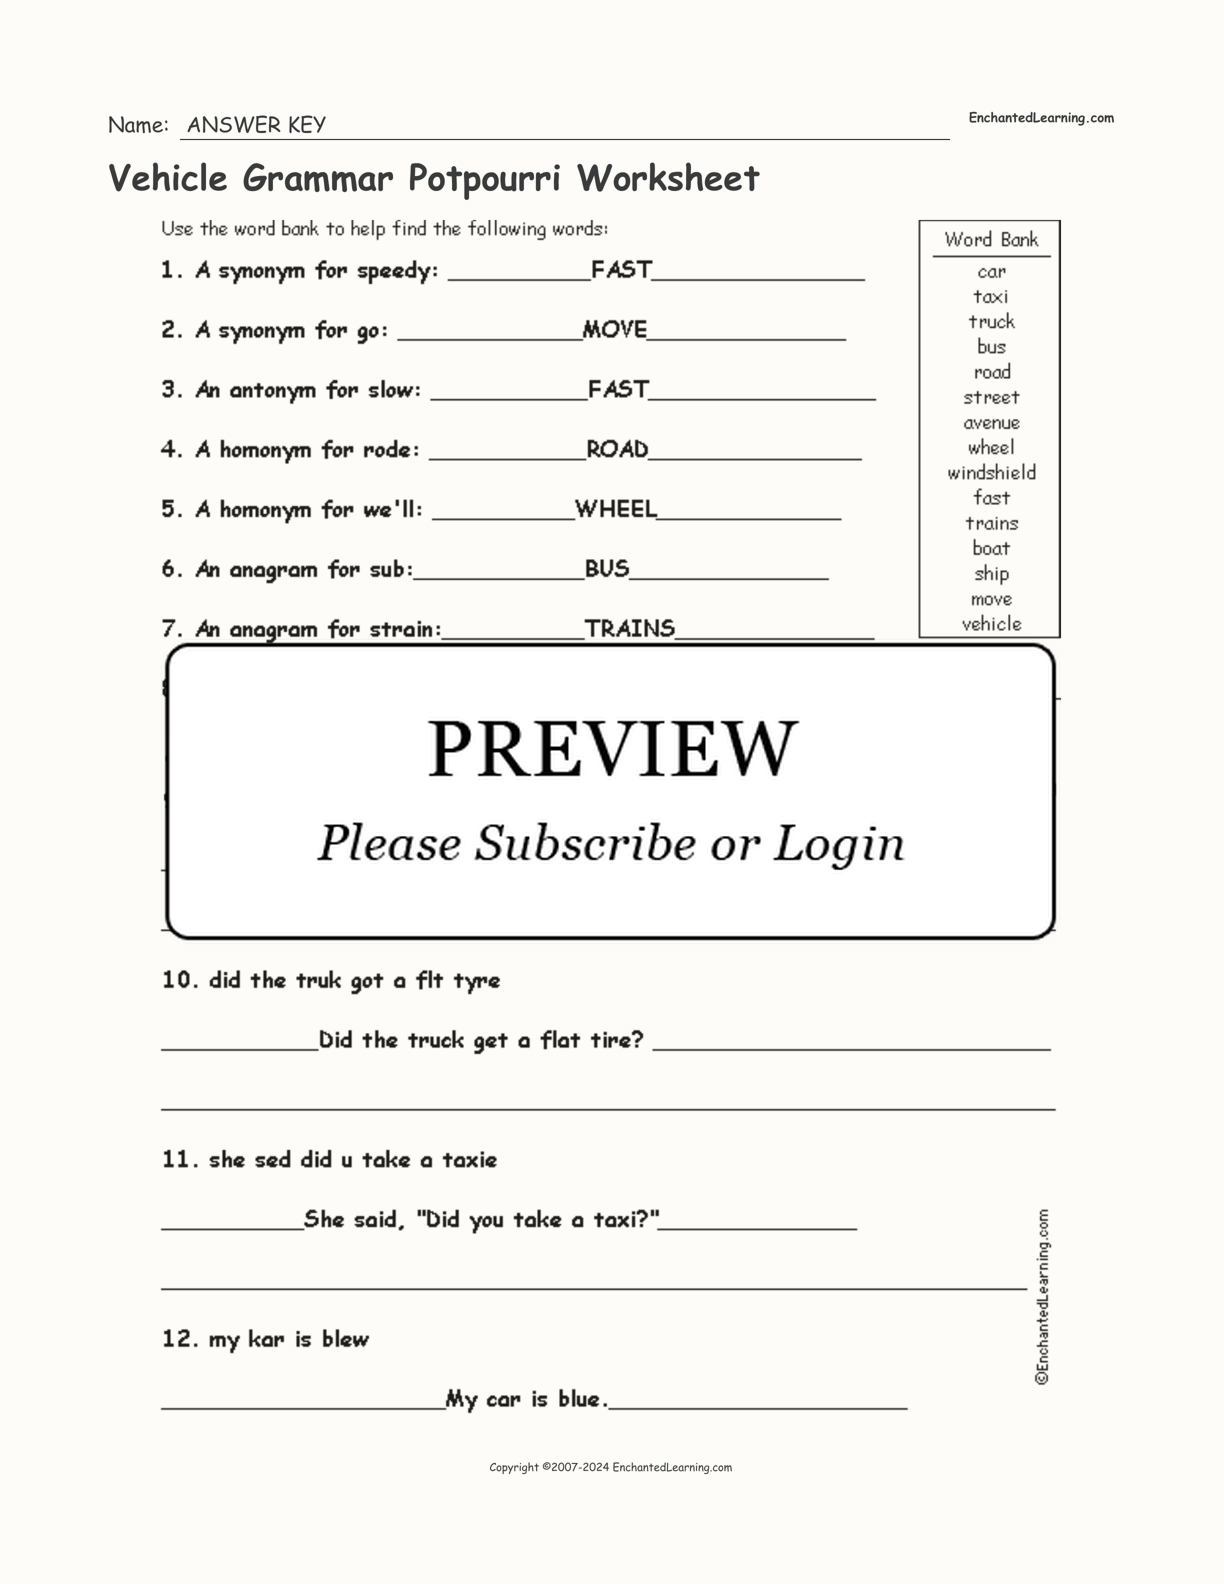 Vehicle Grammar Potpourri Worksheet interactive worksheet page 2